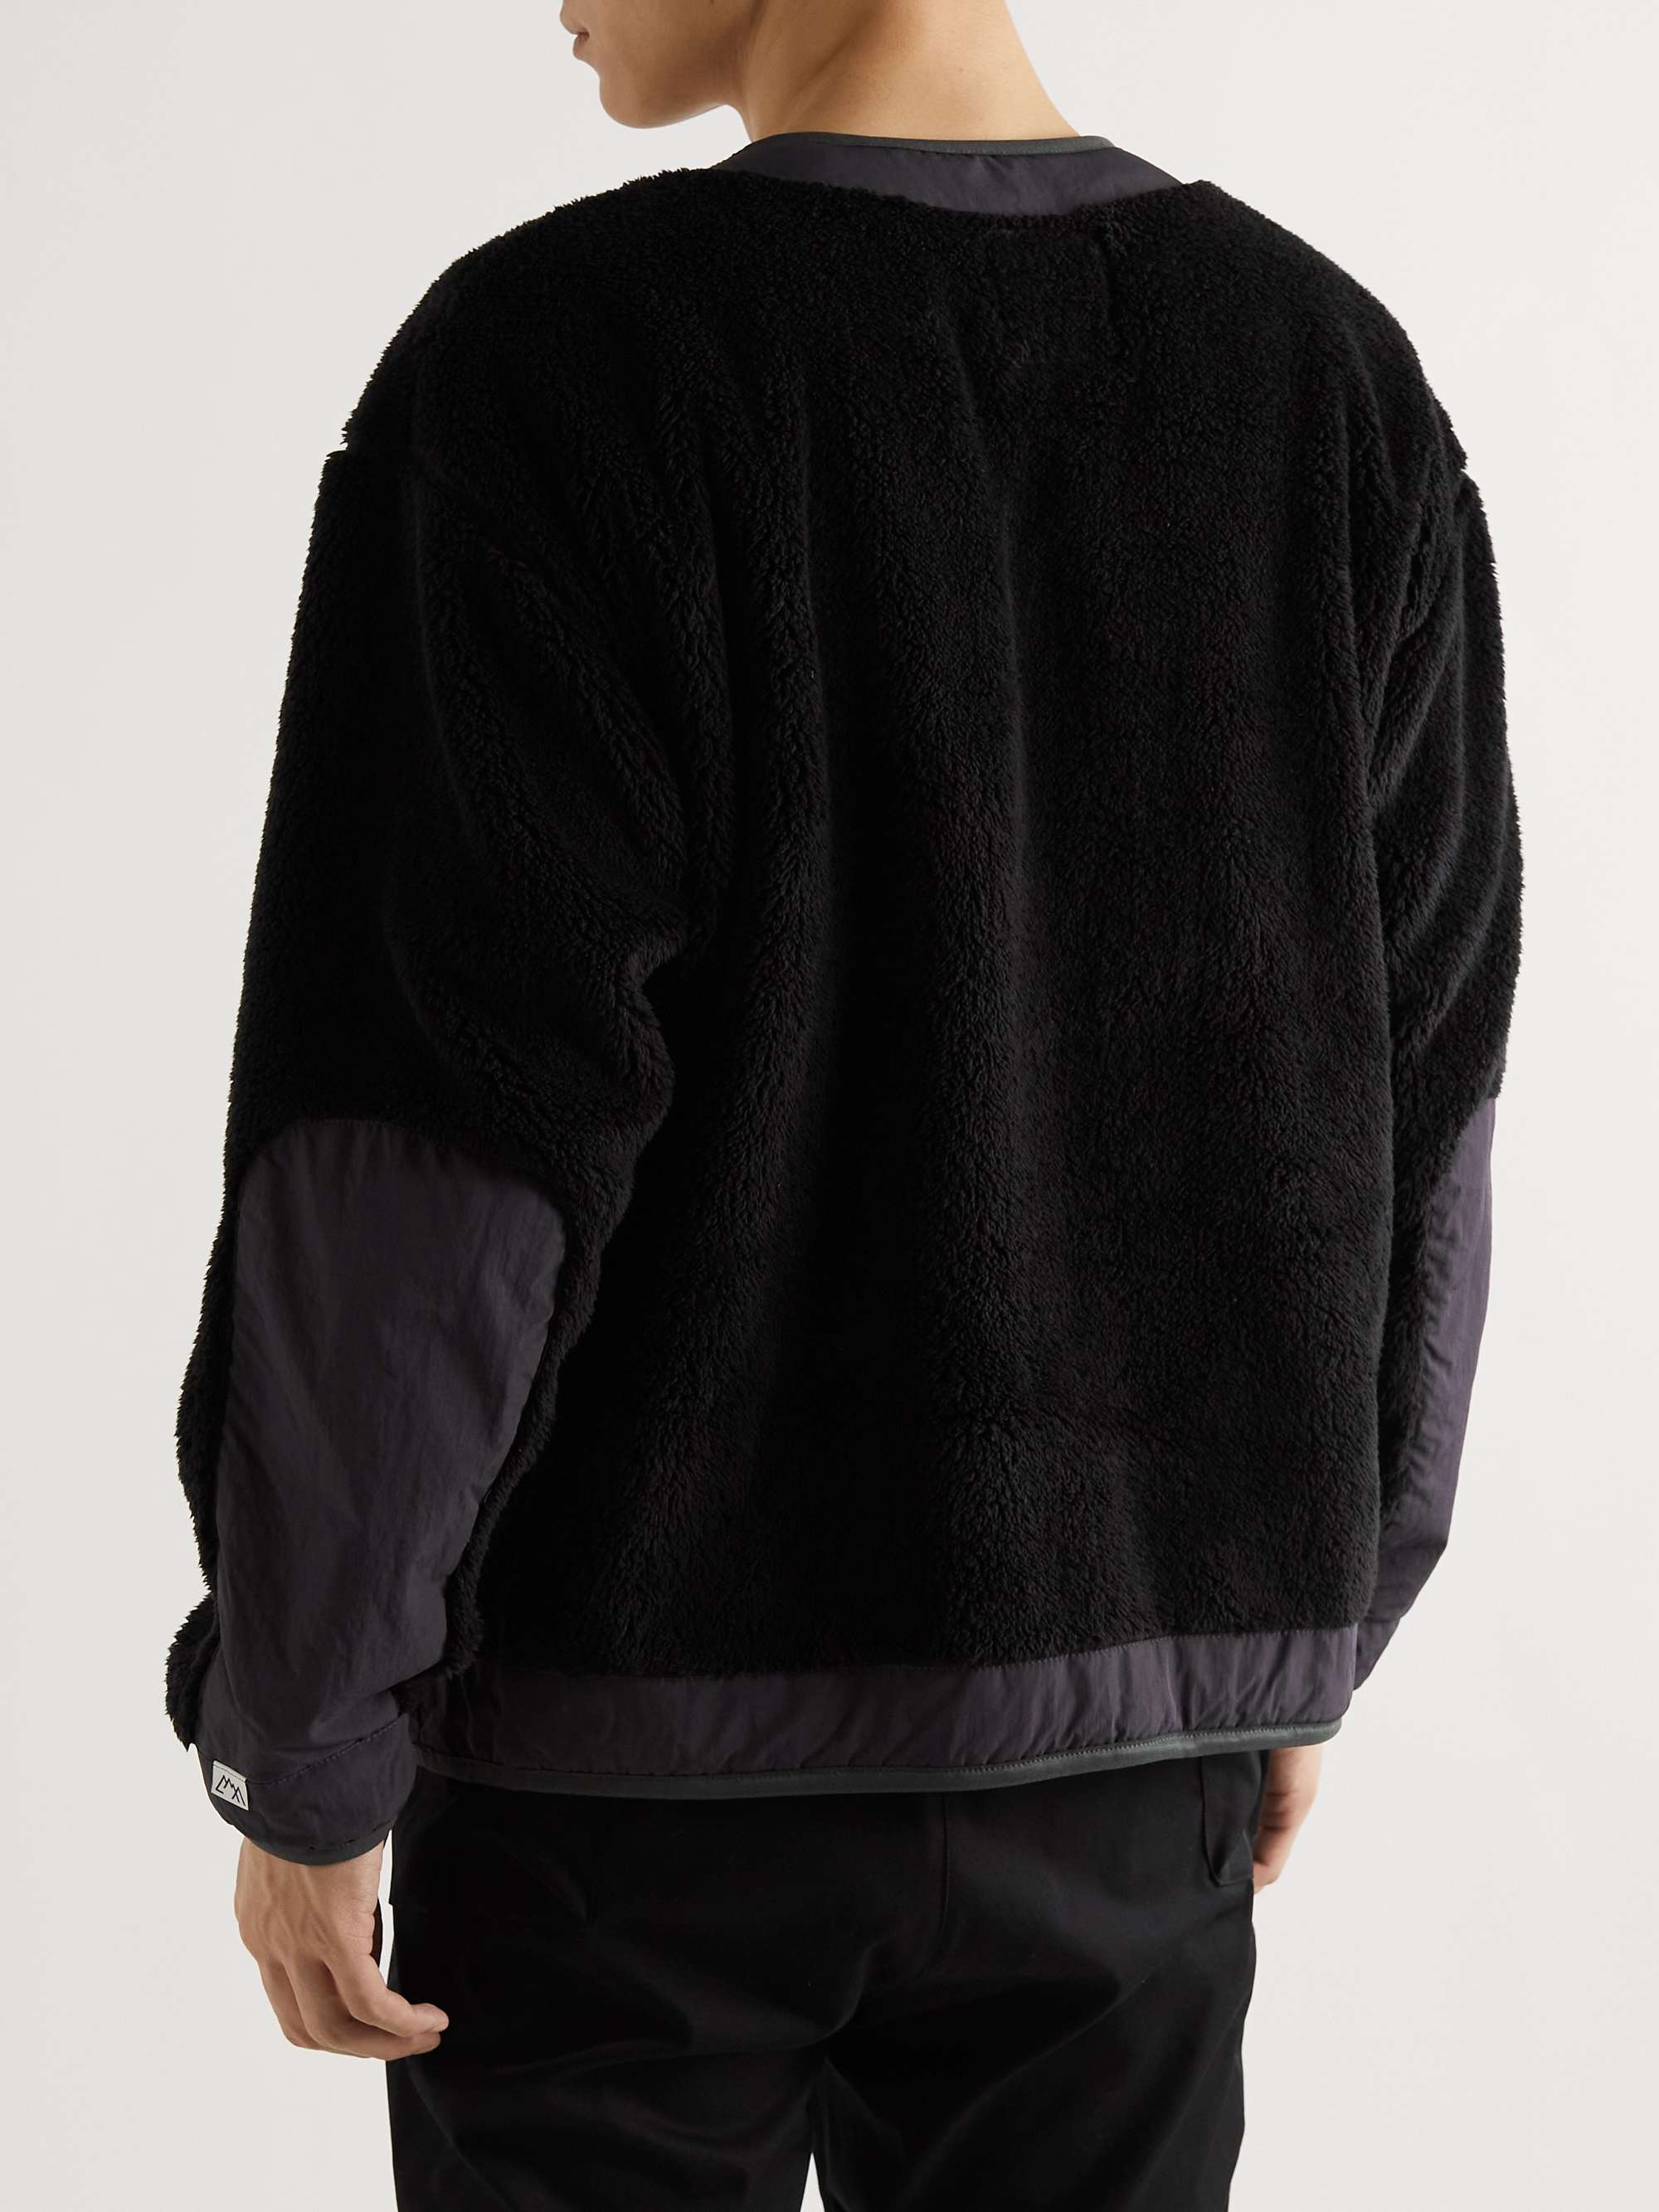 COMFY OUTDOOR GARMENT Panelled Fleece and Shell Sweatshirt